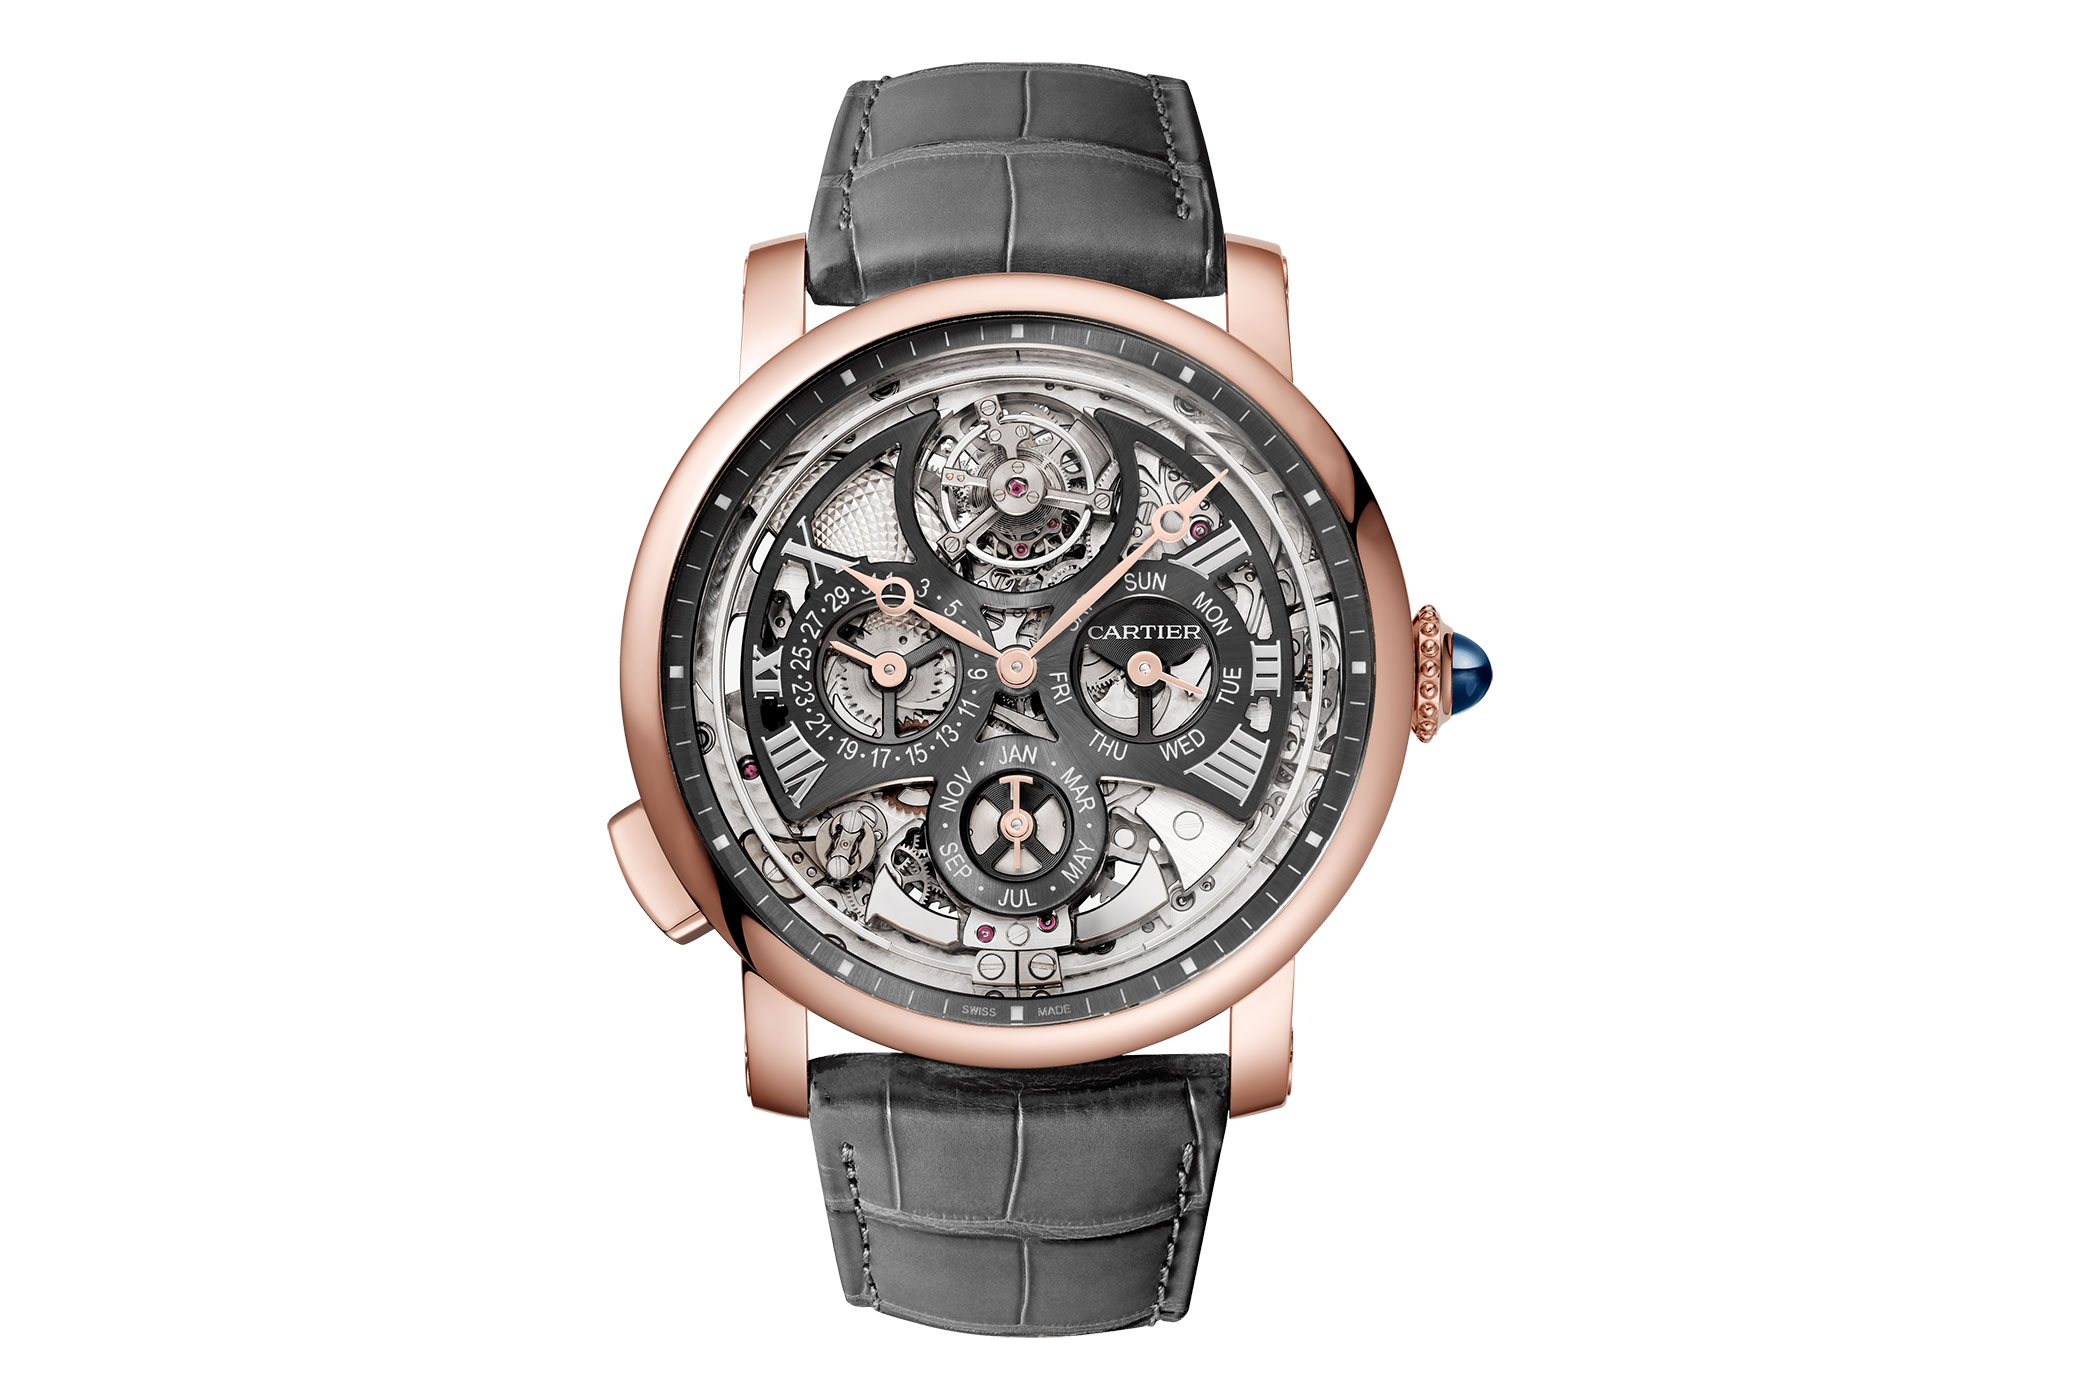 Cartier Rotonde de Cartier - Haute Horlogerie Watches | Swisswatches ...